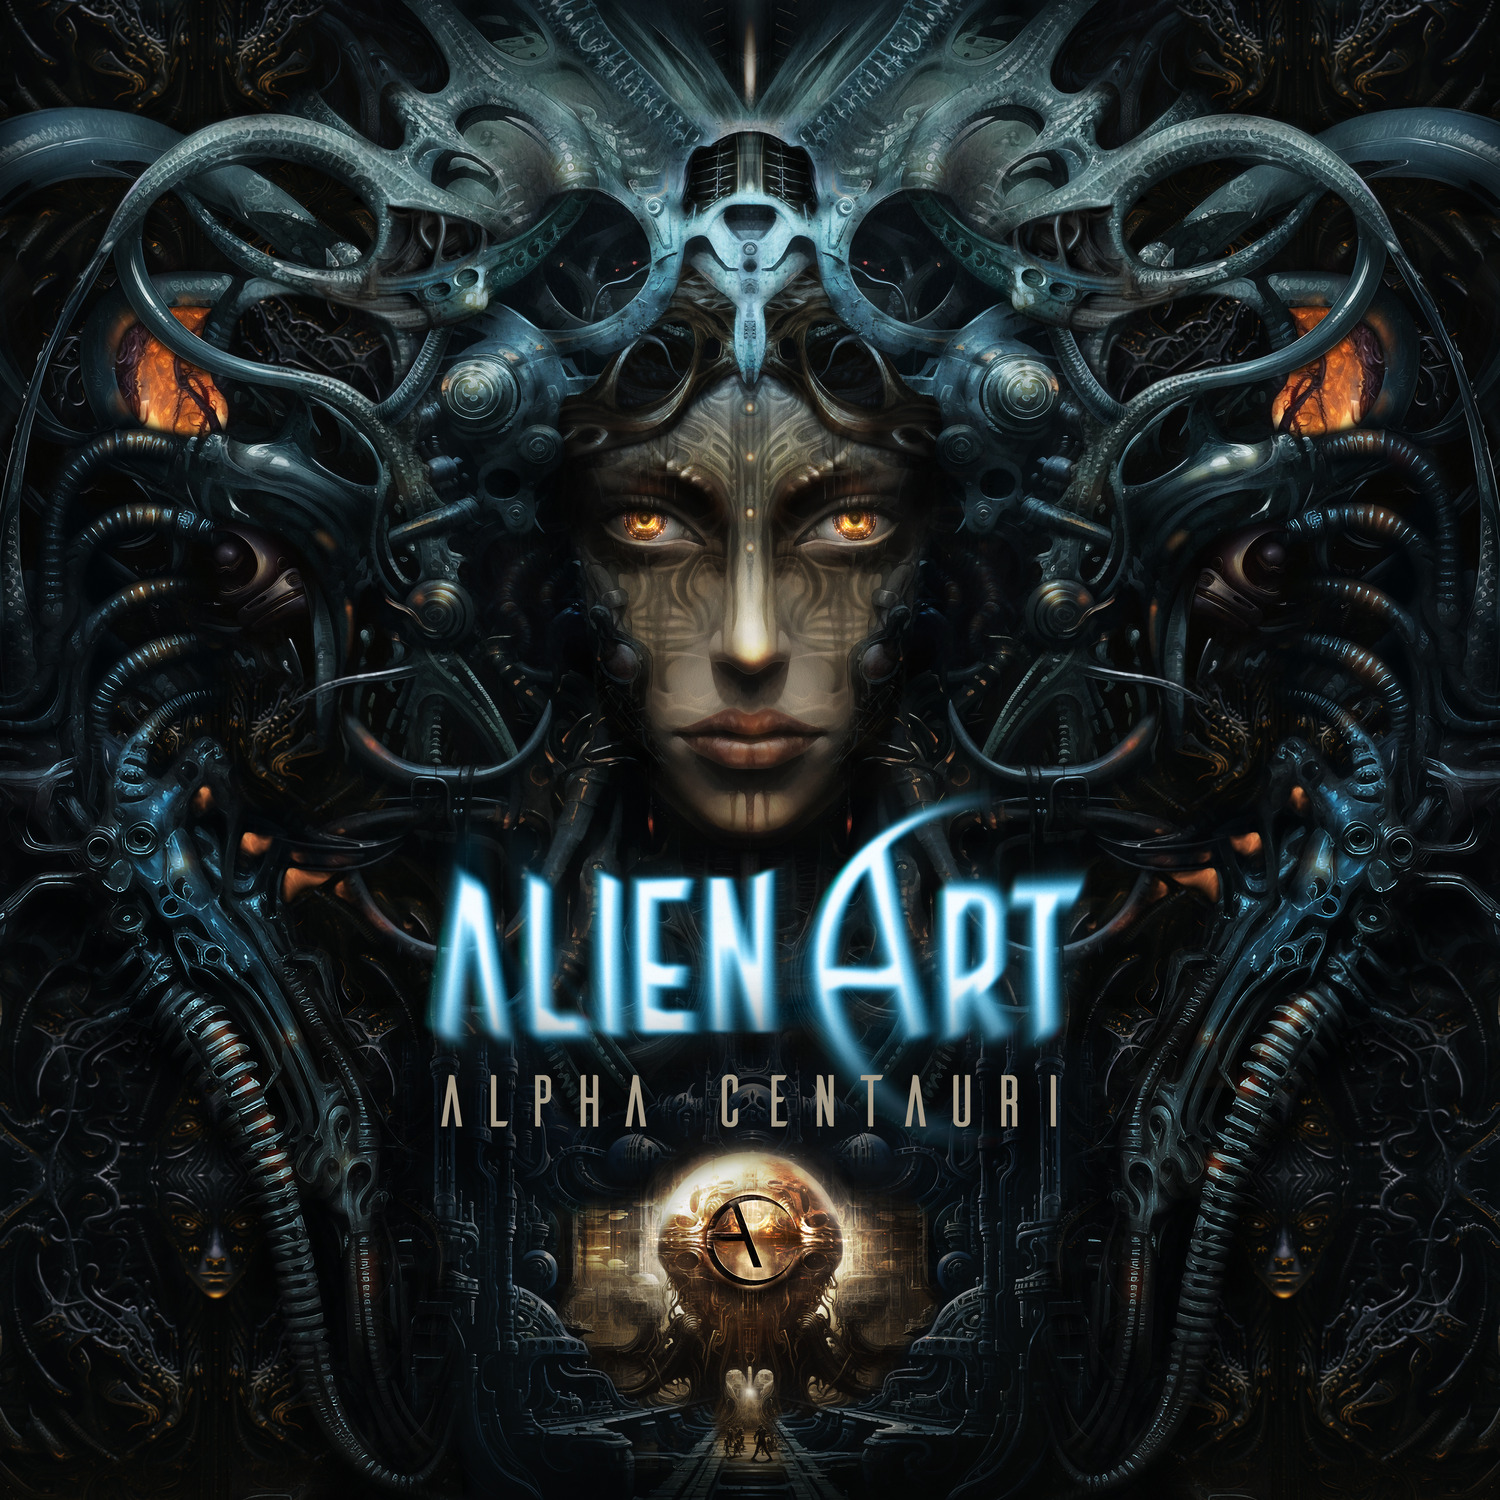 New Alien Art album - Alpha Centauri out now!